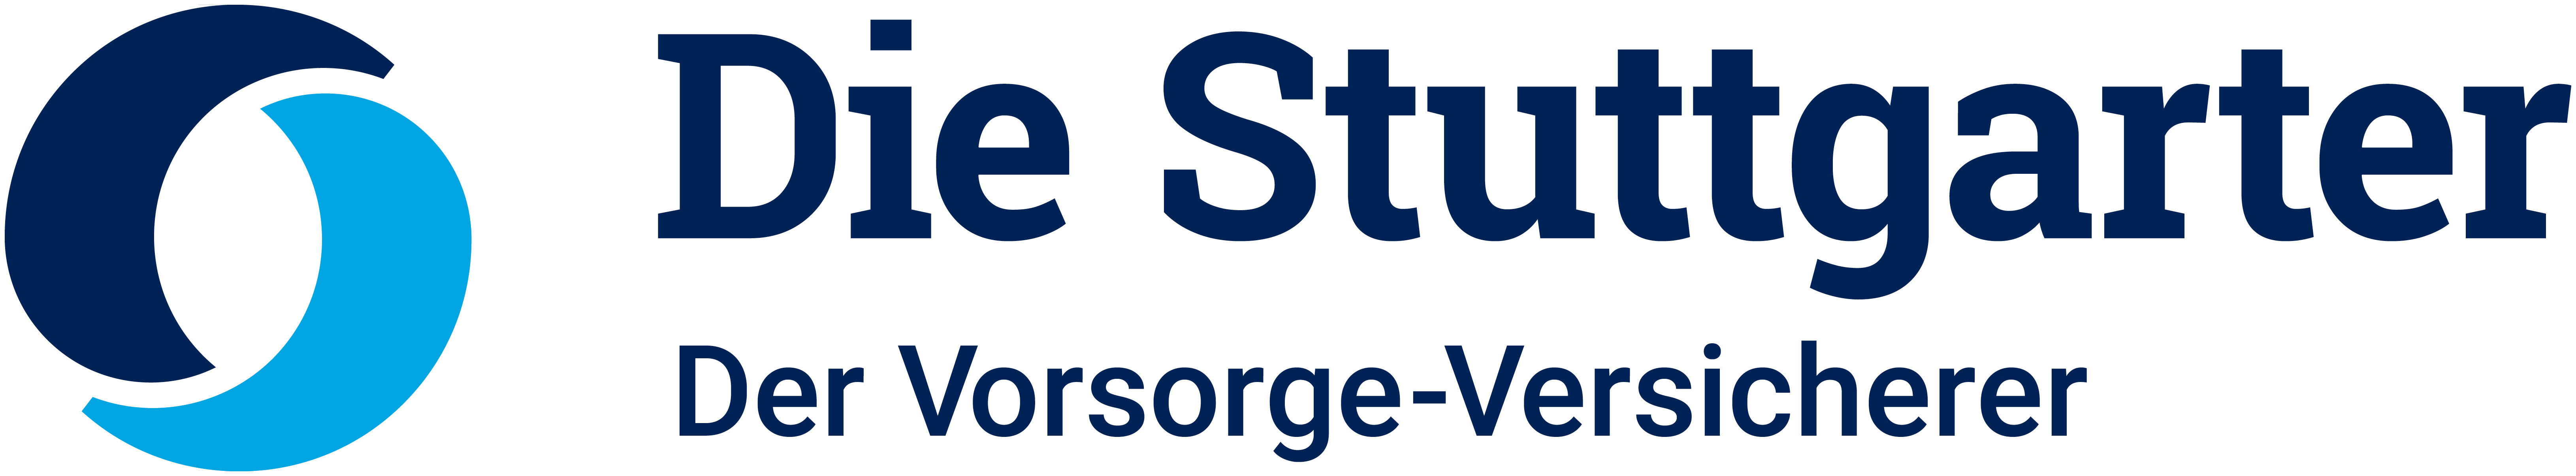 Logo Die Stuttgarter